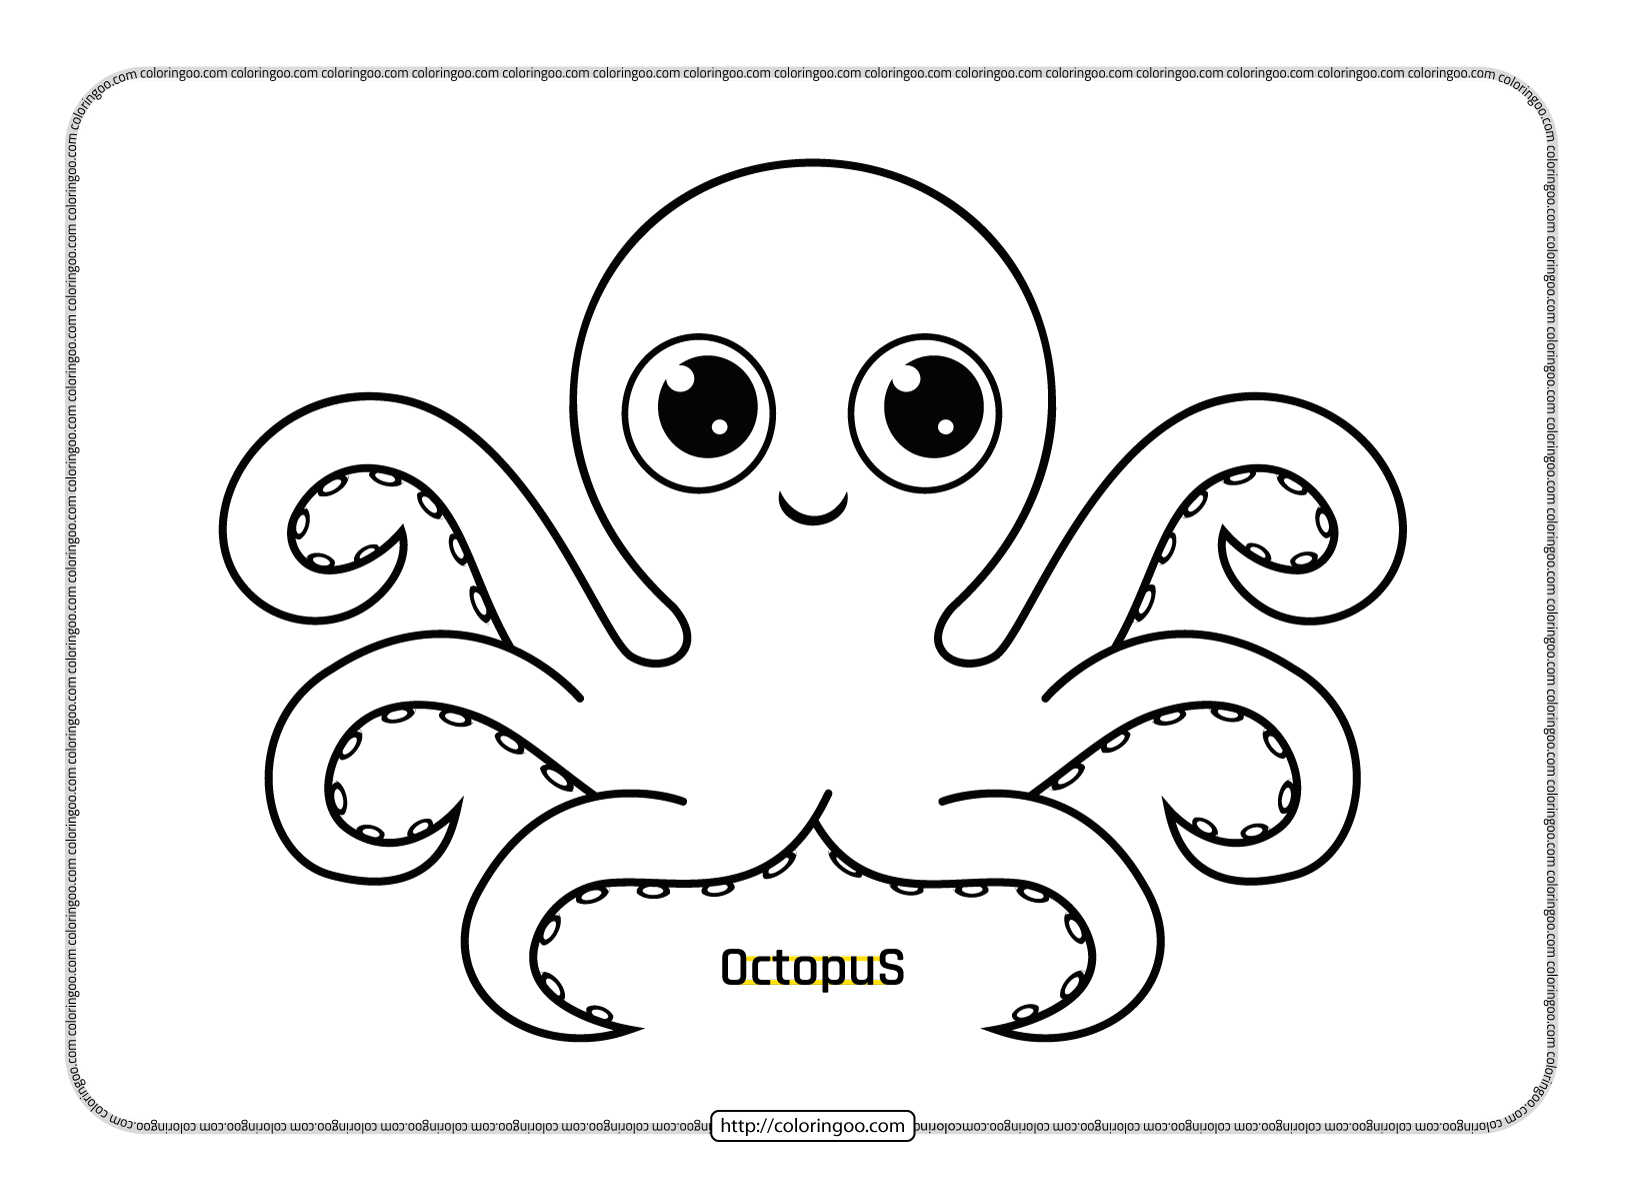 Cute kawaii animal baby octopus coloring page octopus coloring page cute kawaii animals baby octopus